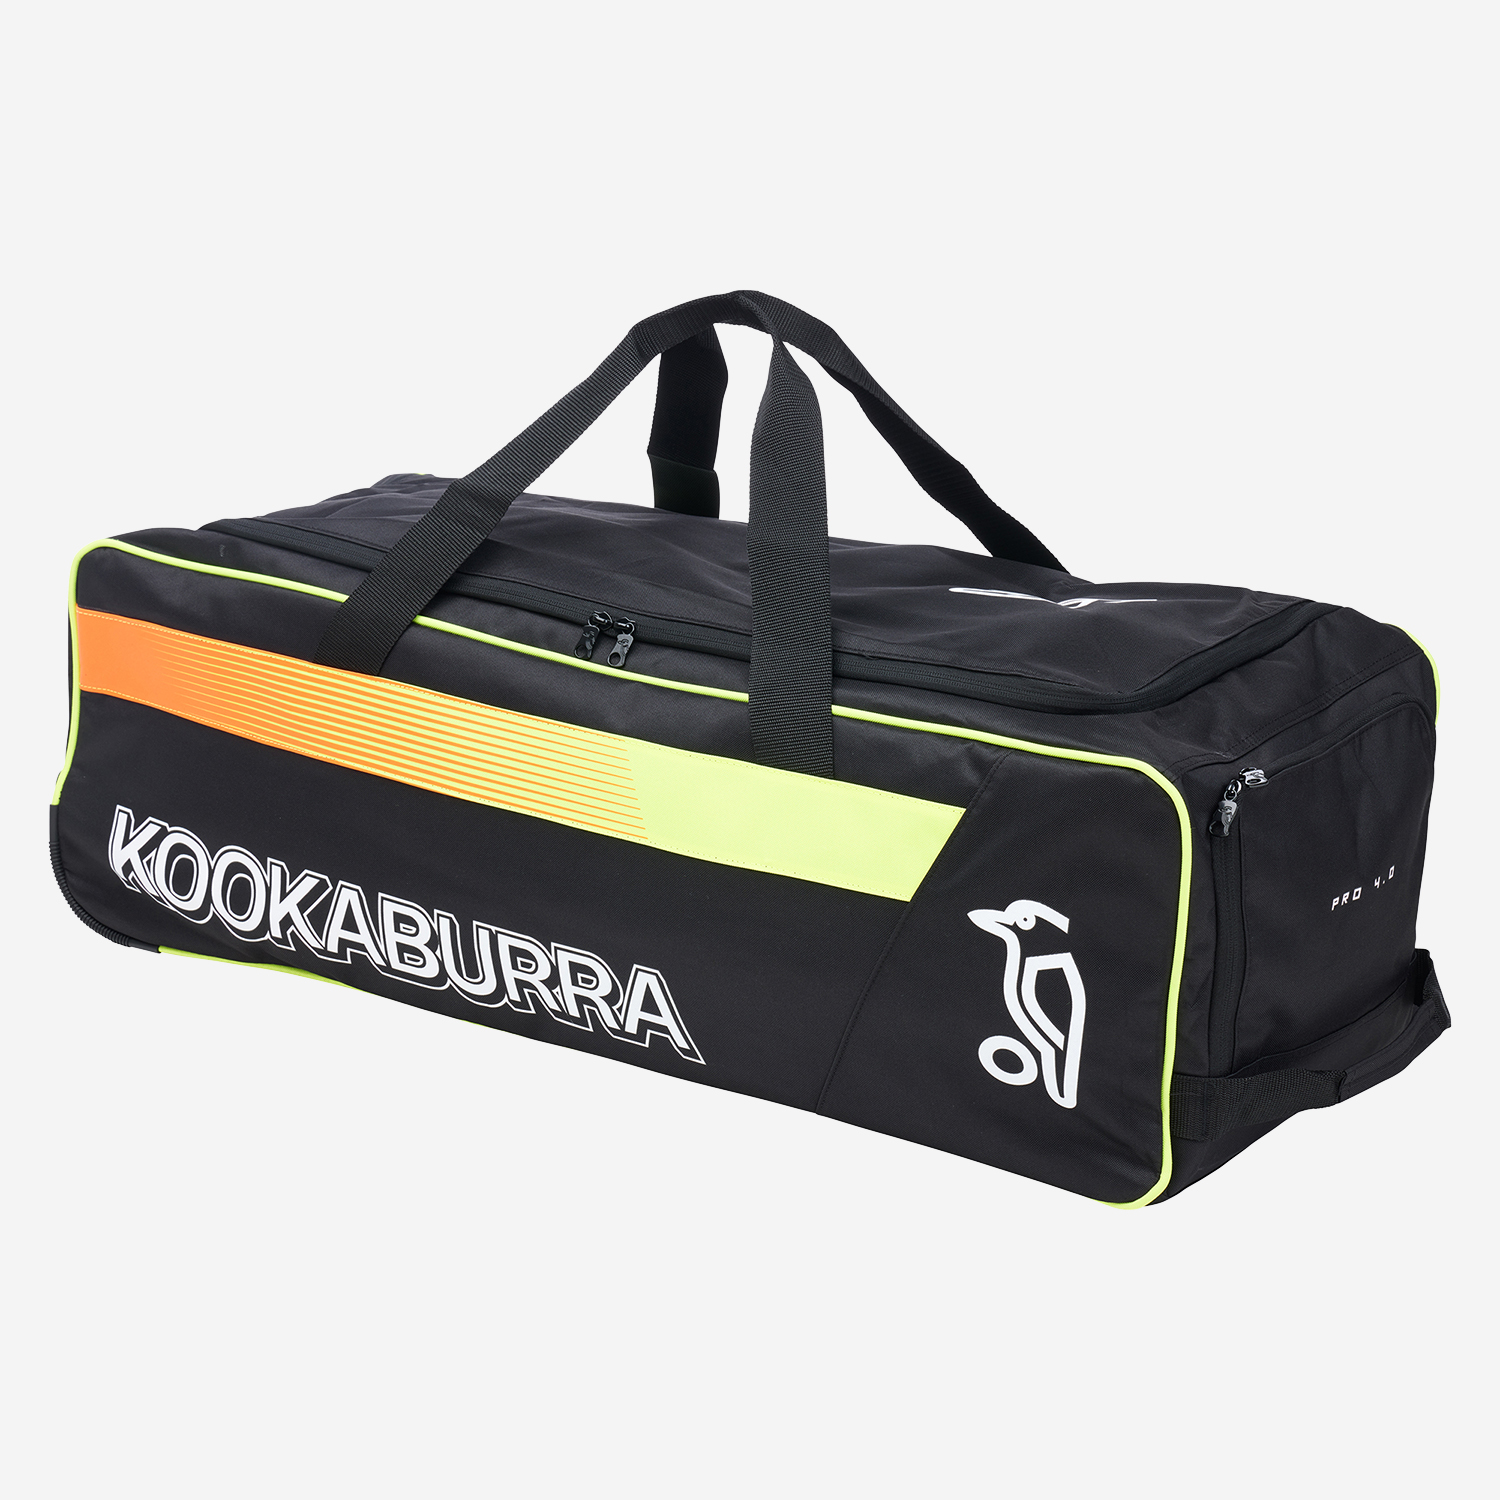 Pro 4.0 Cricket Wheelie Bags